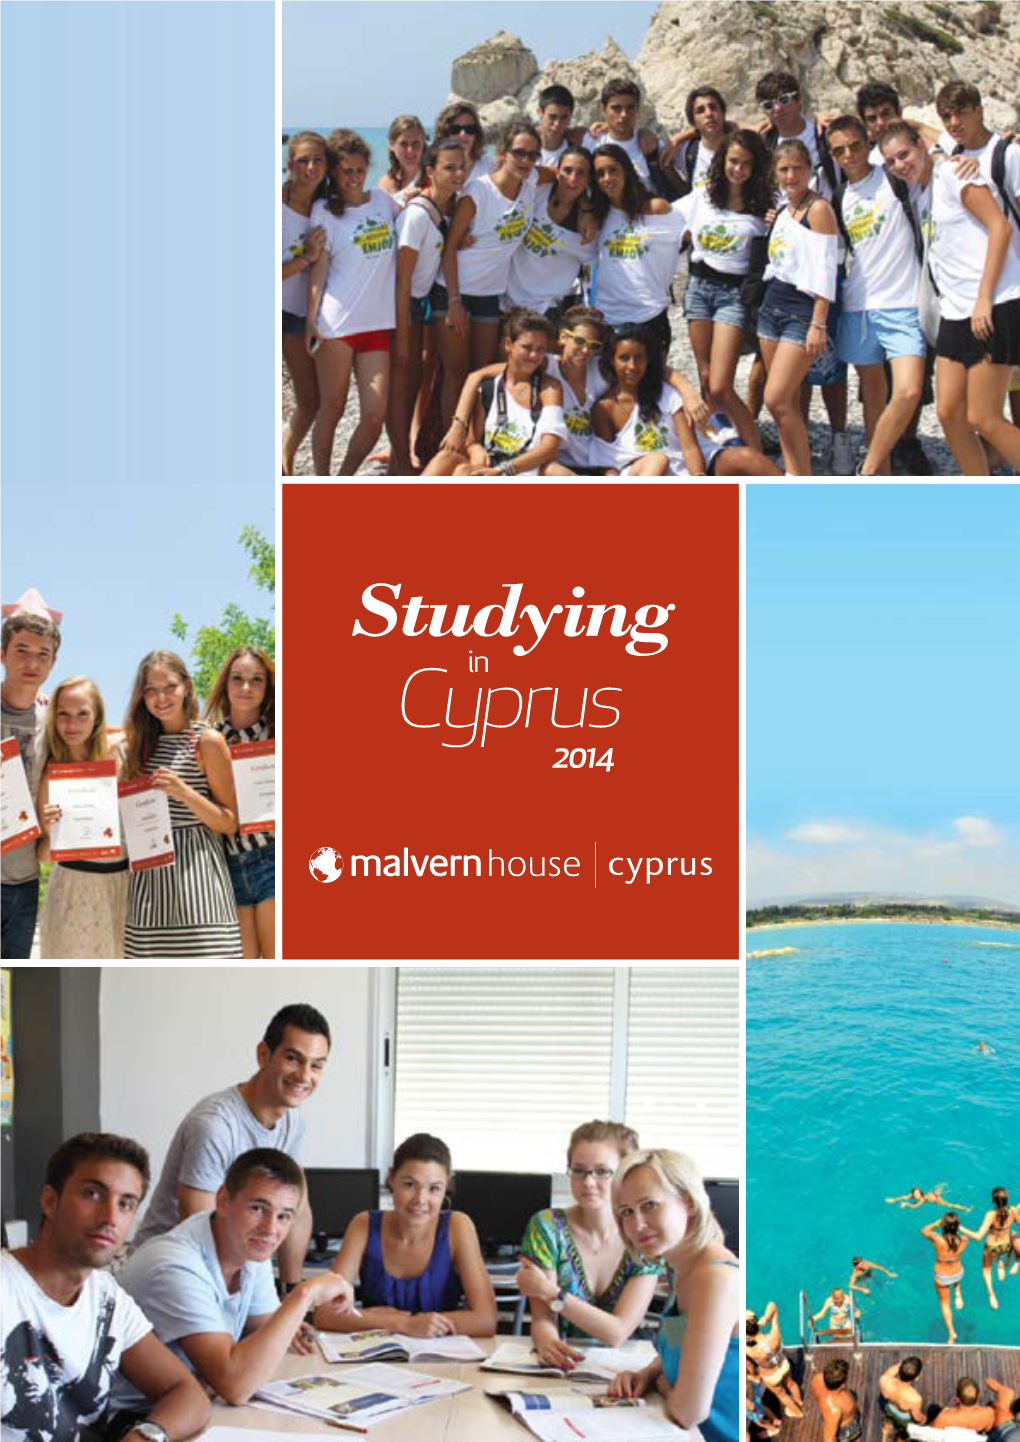 Studying Cyprus